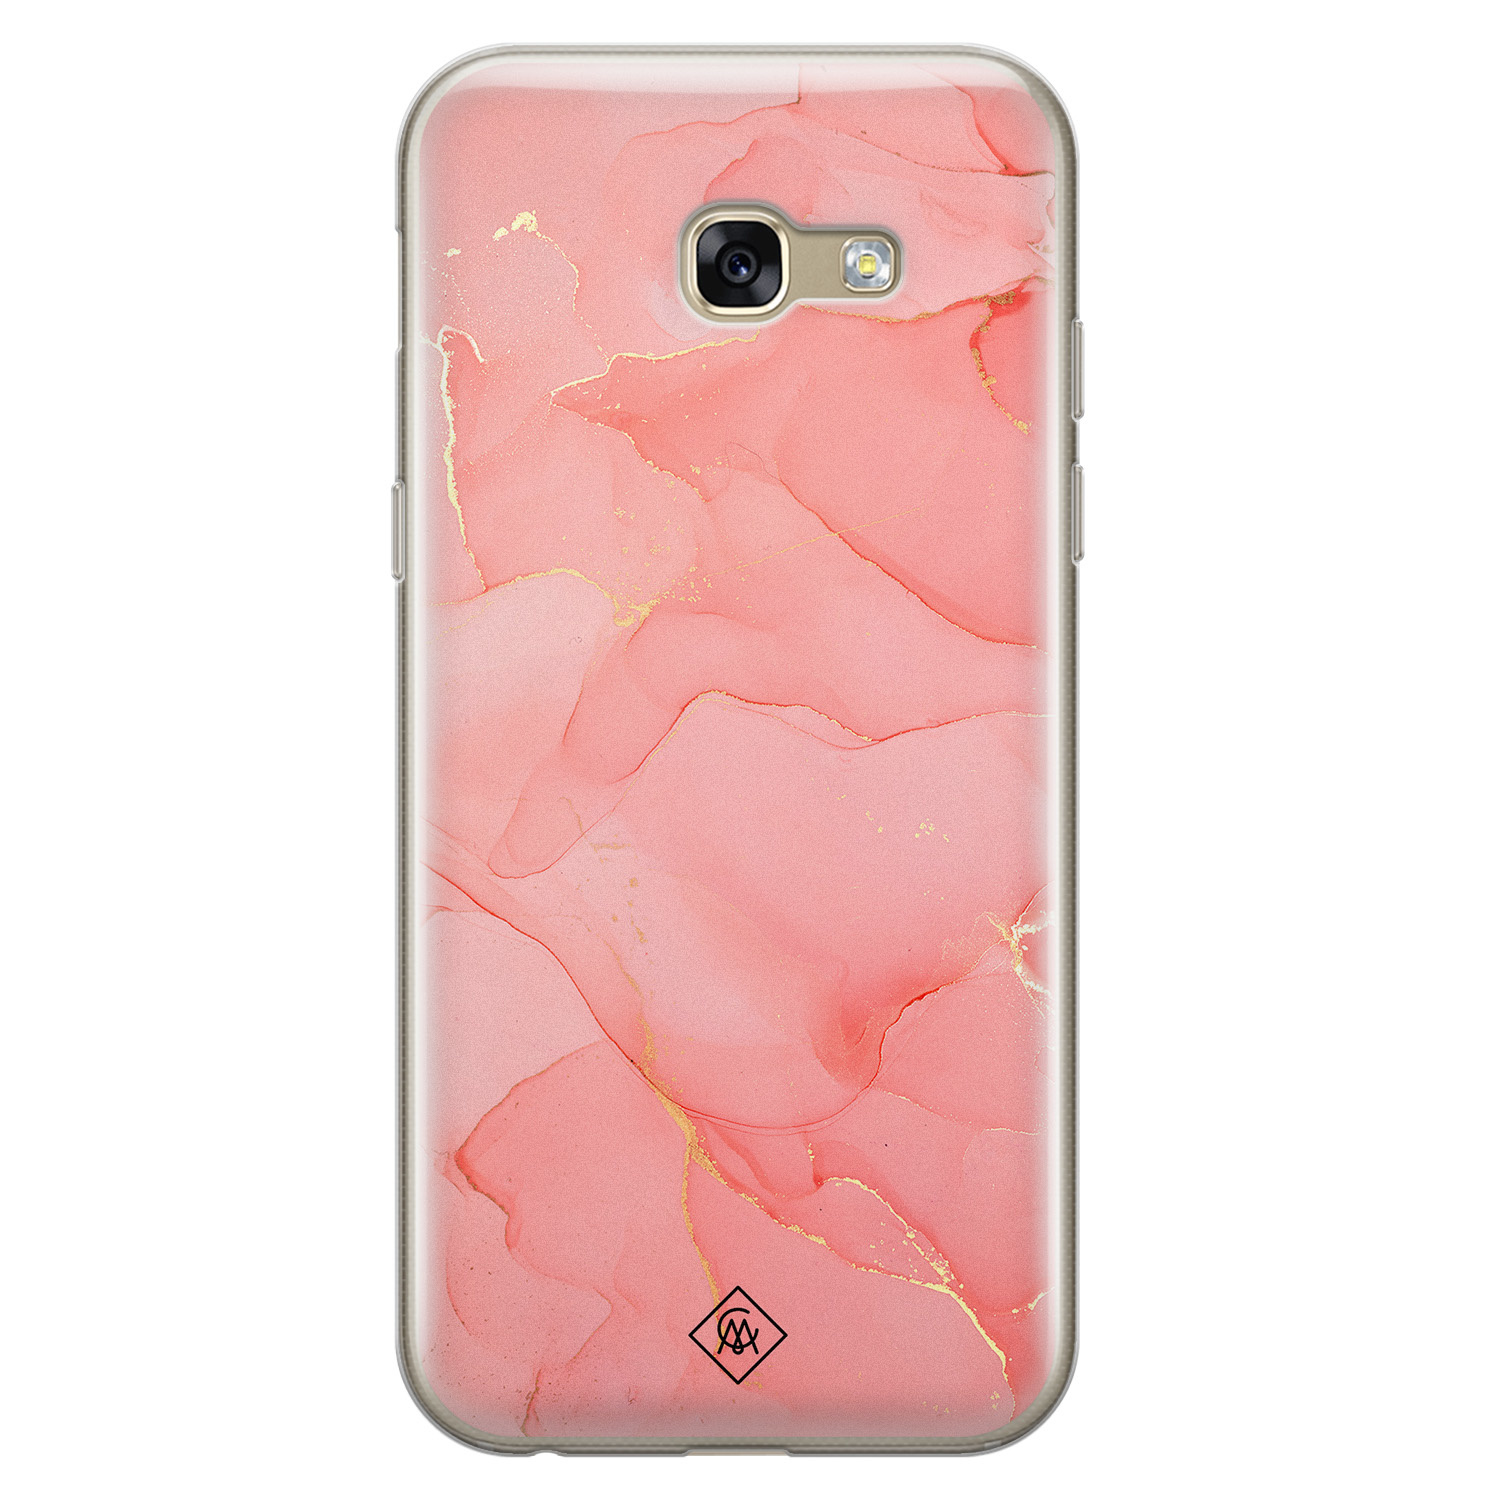 Assimilatie stijl peddelen Samsung Galaxy A5 2017 siliconen hoesje - Marmer roze - Casimoda.nl